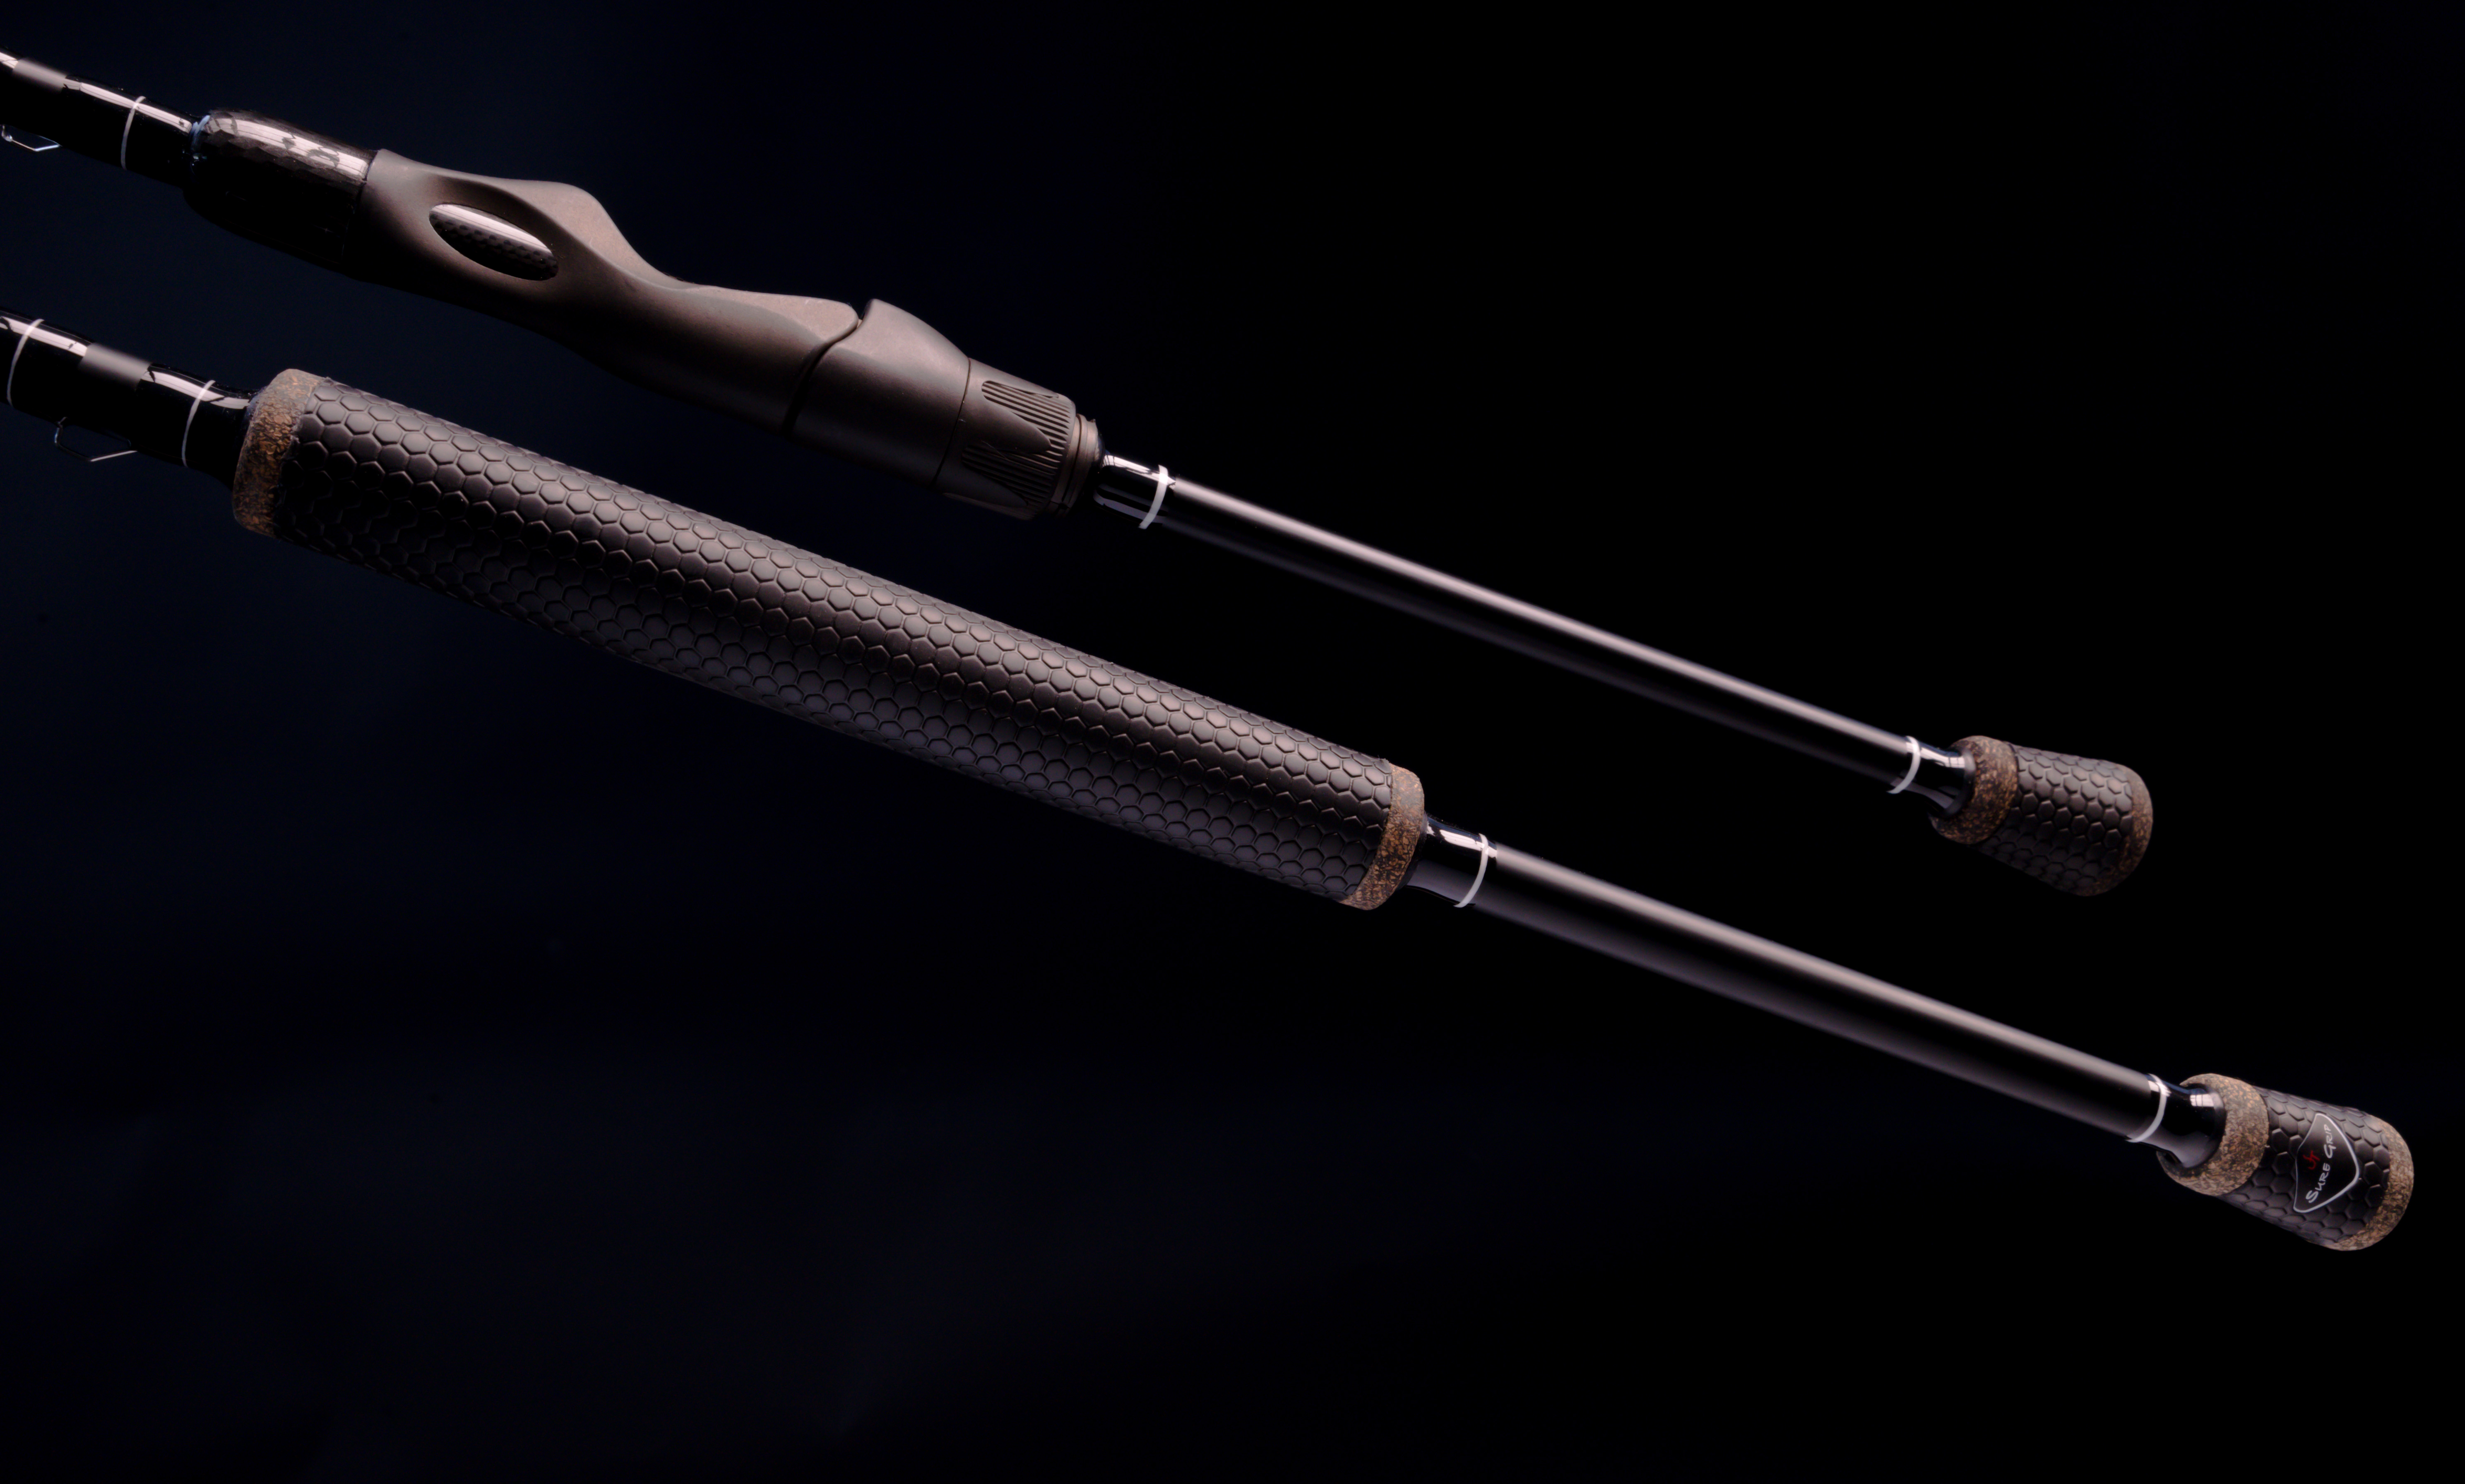 Bass Rod 6FT Carbon Fiber Power Medium Fast Action Spinning Rod Black –  Fishman Supplies